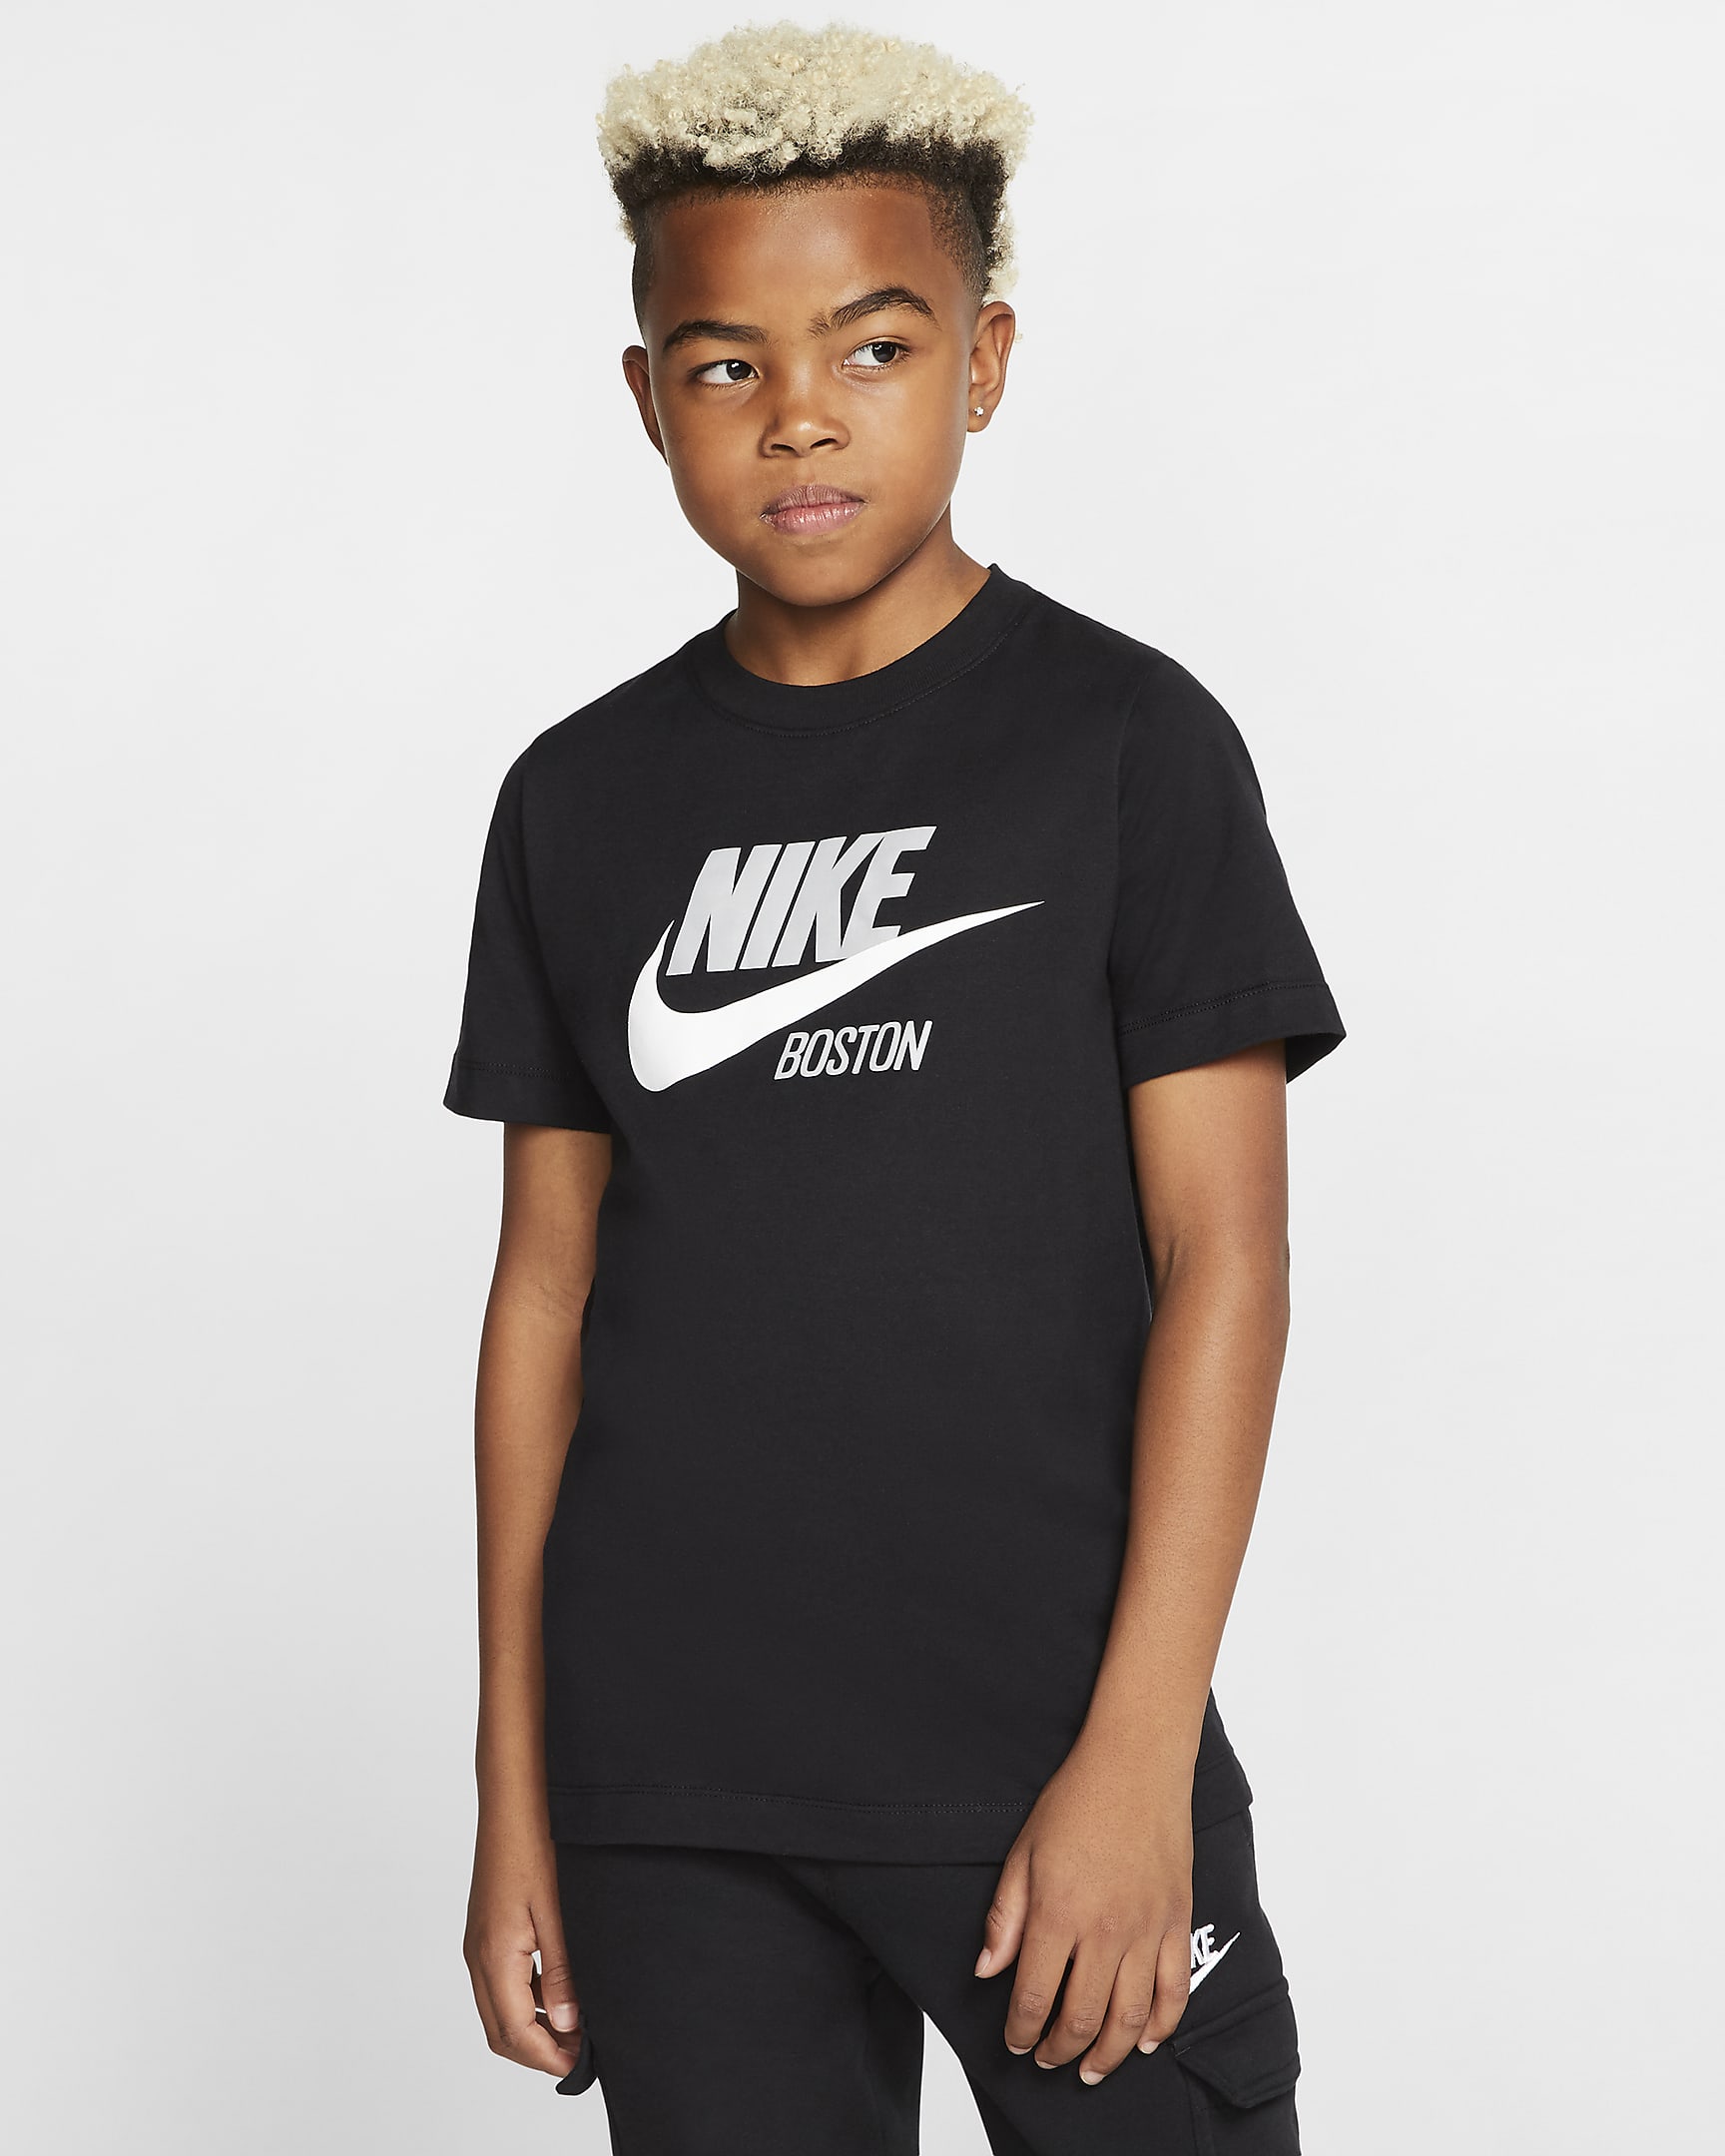 Nike Sportswear Boston Big Kids' T-Shirt. Nike.com